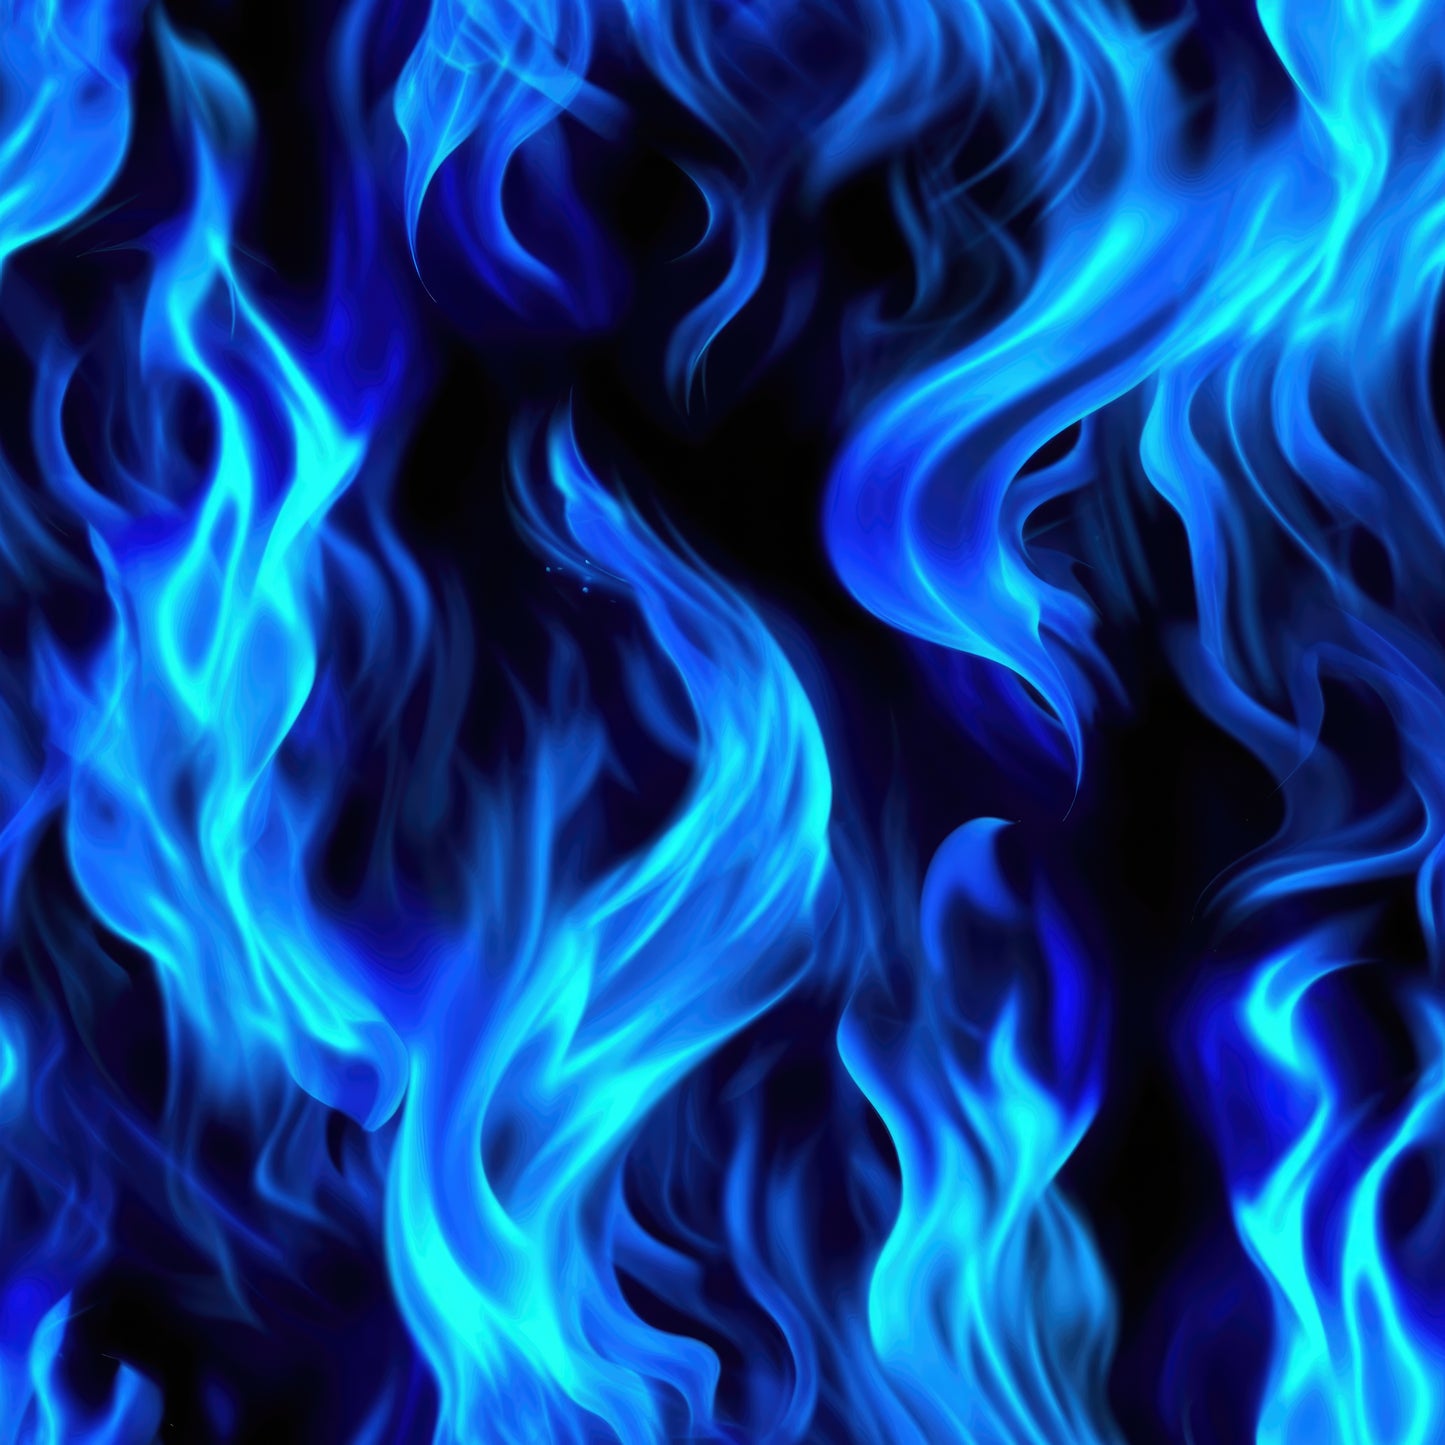 BLUE FLAMES VINYL - MULTIPLE VARIATIONS